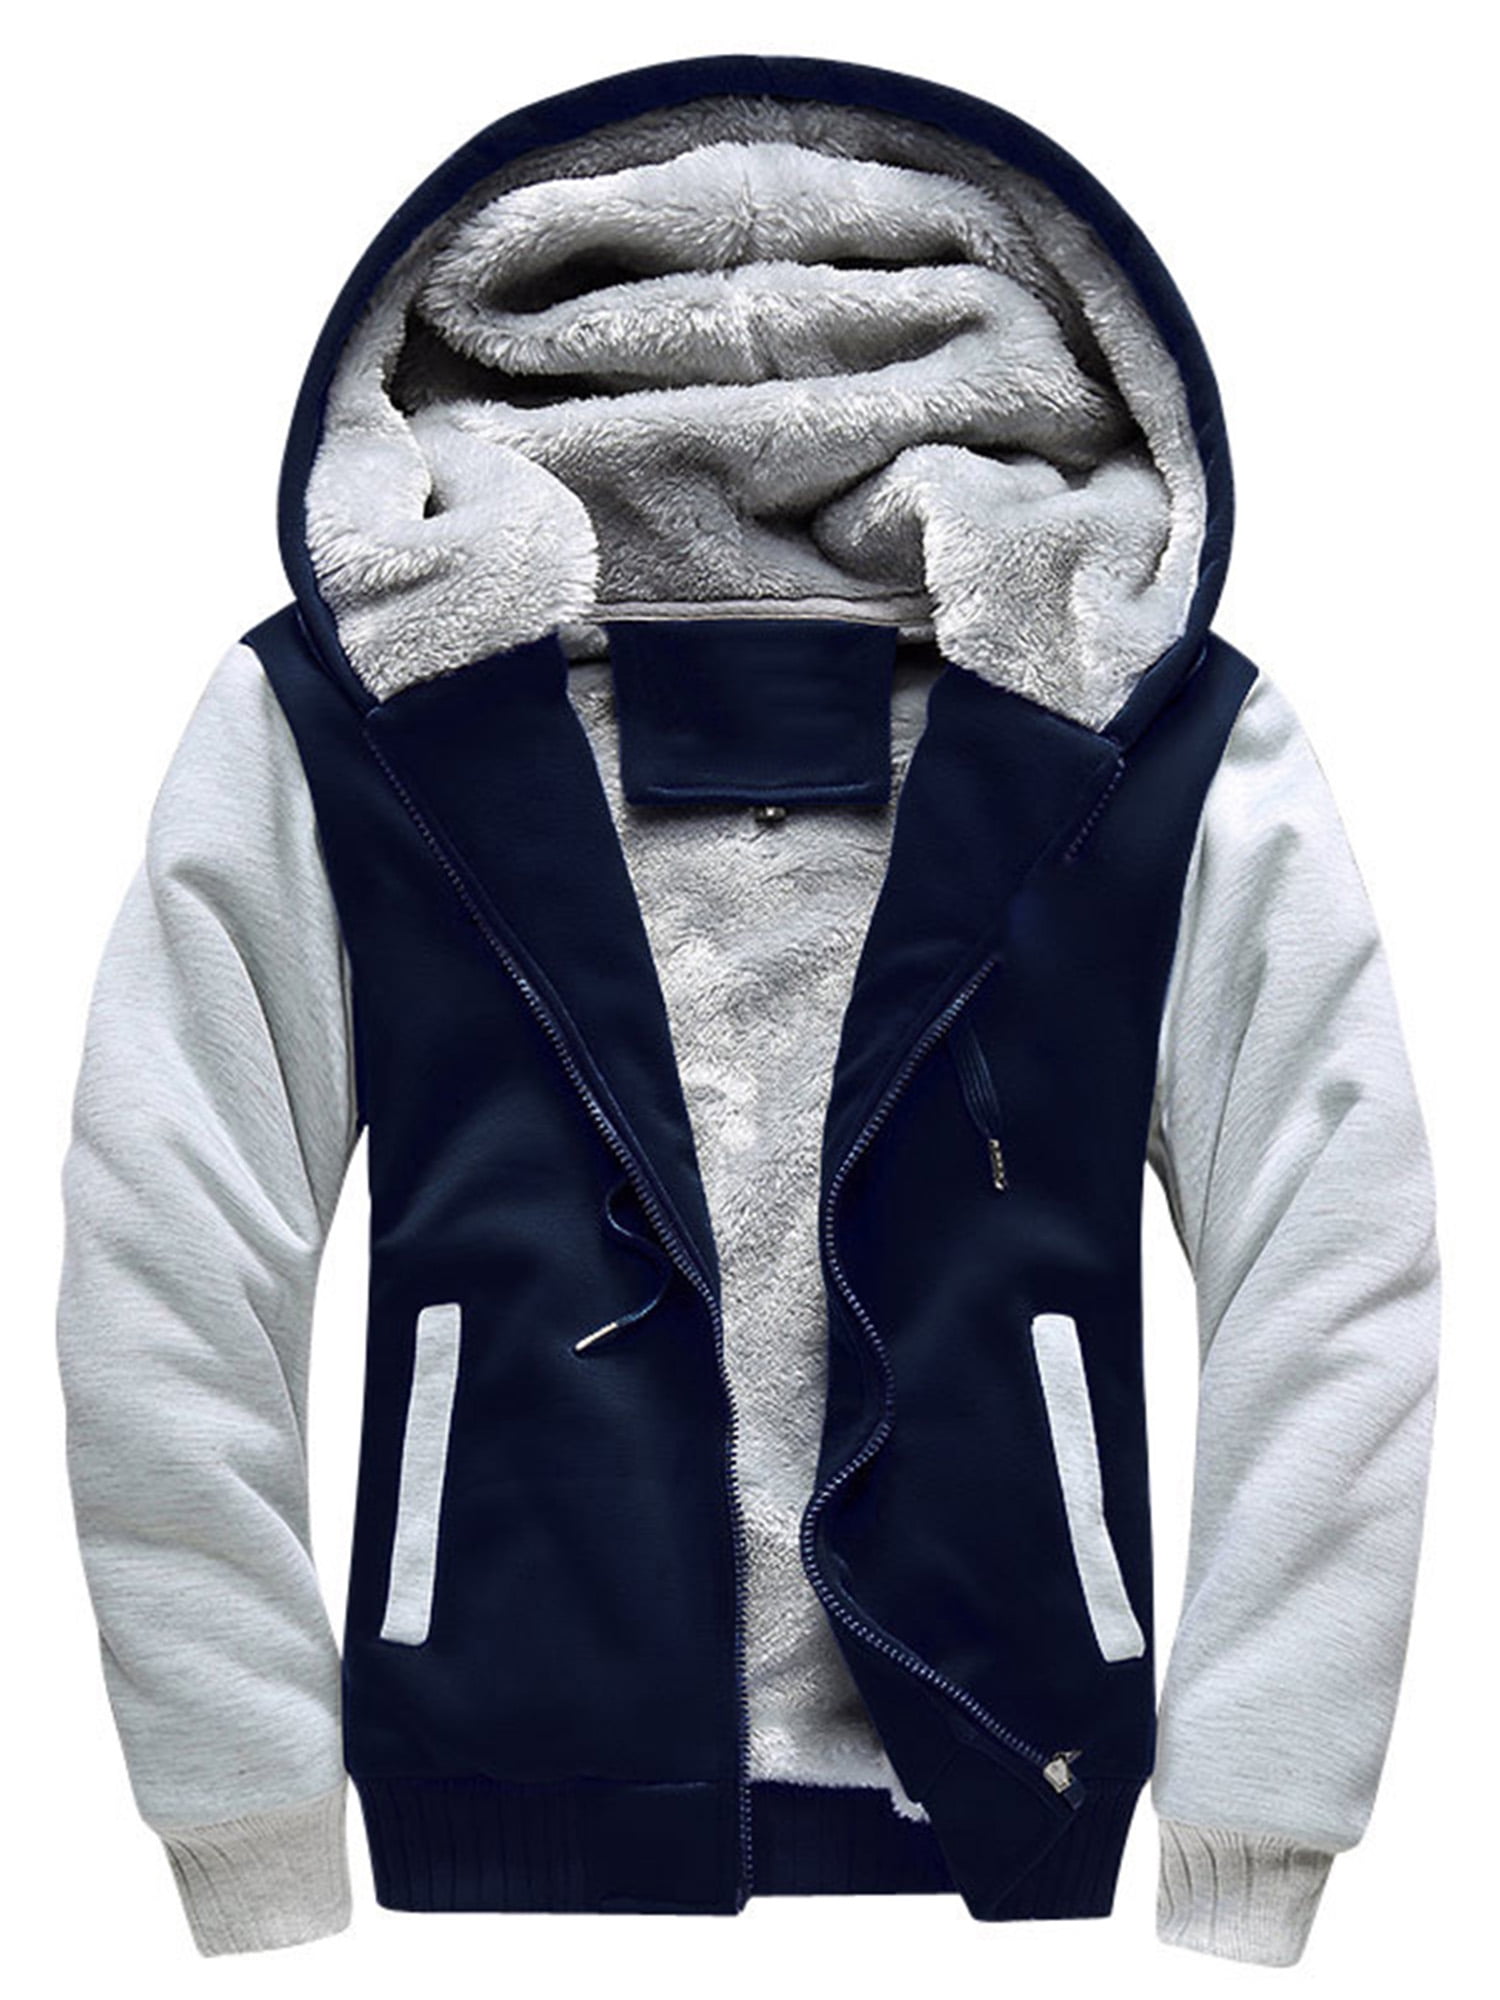 Goutique Mens Fashion Hoodie Sweatshirts Zip Up Casual Slim Fit Contrast Color Jacket Thin Coat